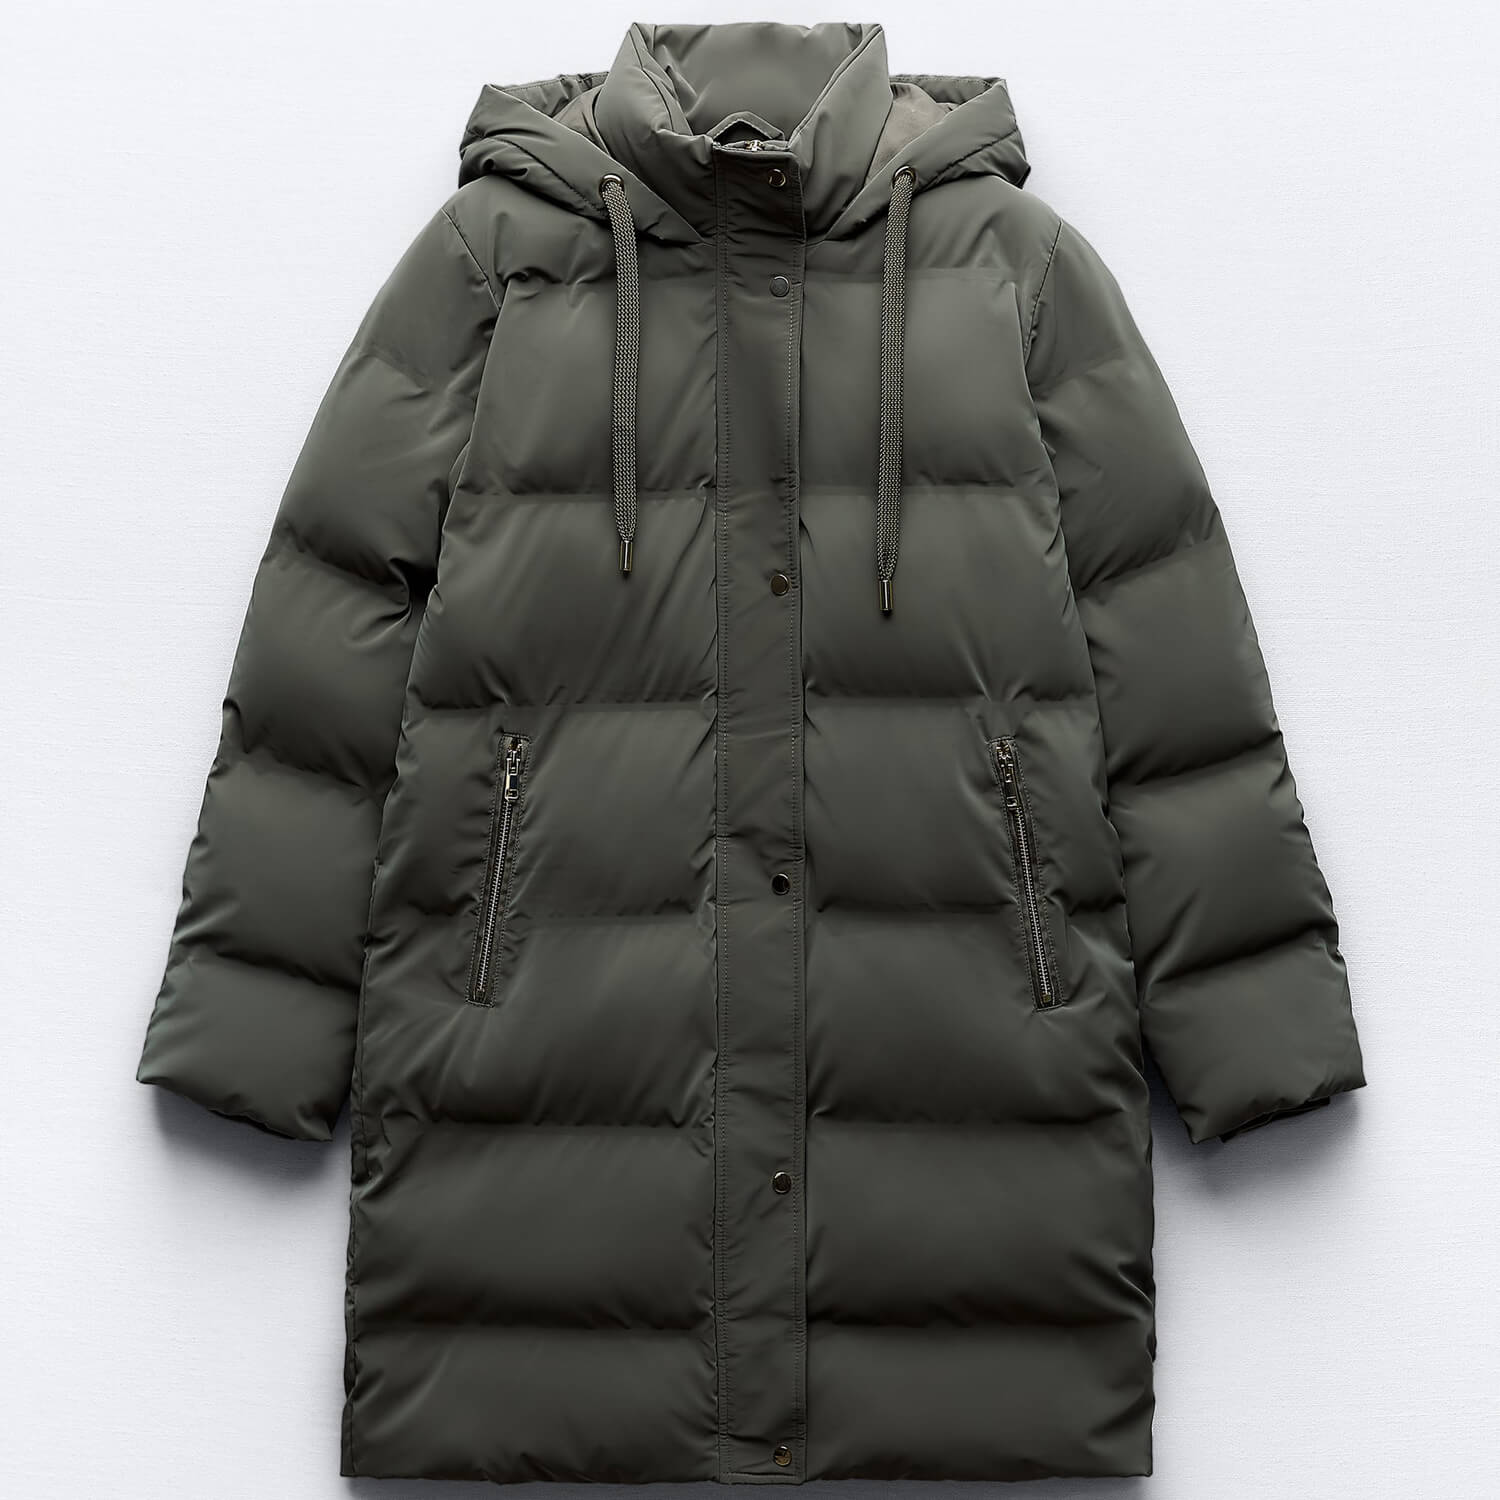 Куртка-анорак Zara Hooded With Wind Protection, хаки толстовка mexx средней длины капюшон манжеты карманы размер 122 128 синий